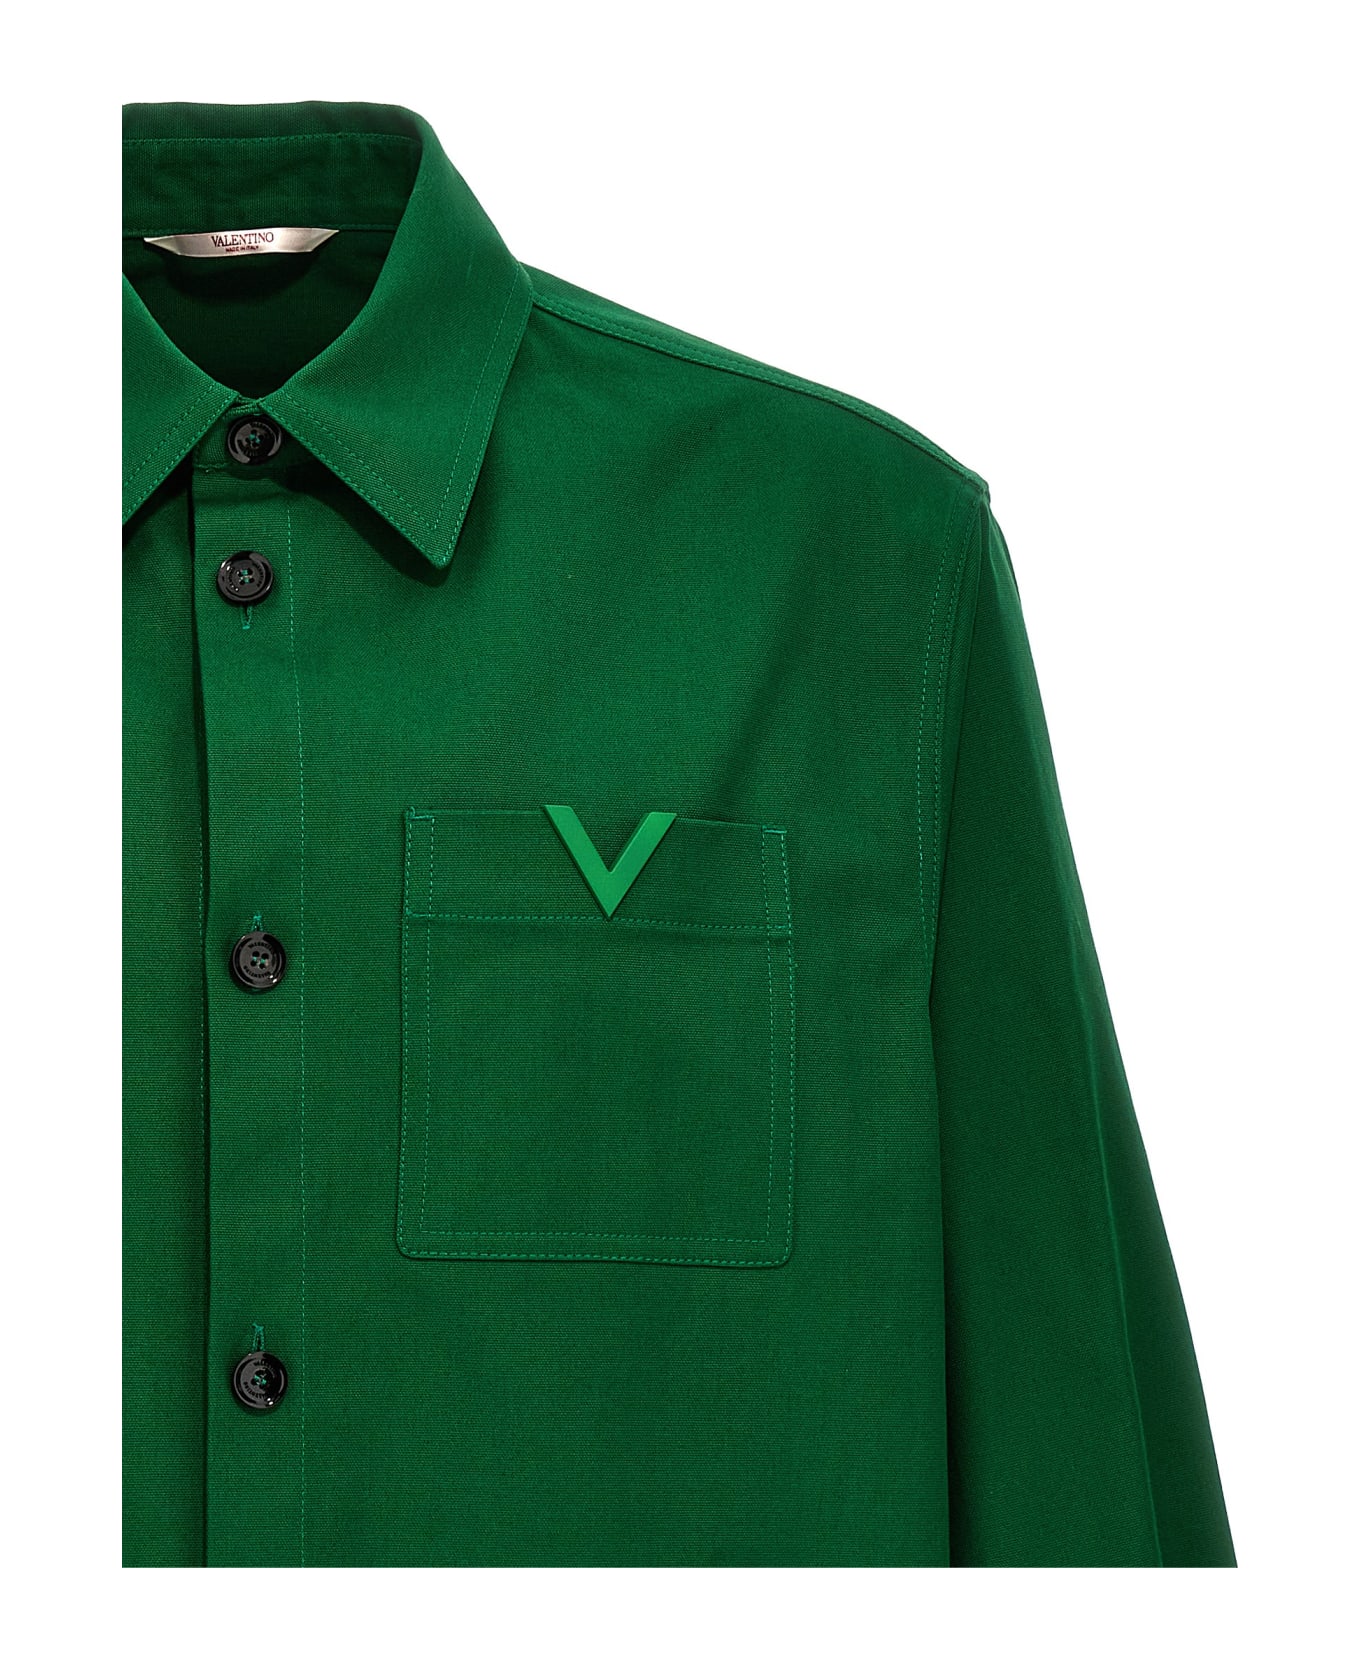 Valentino Garavani Canvas Shirt Jacket - Green